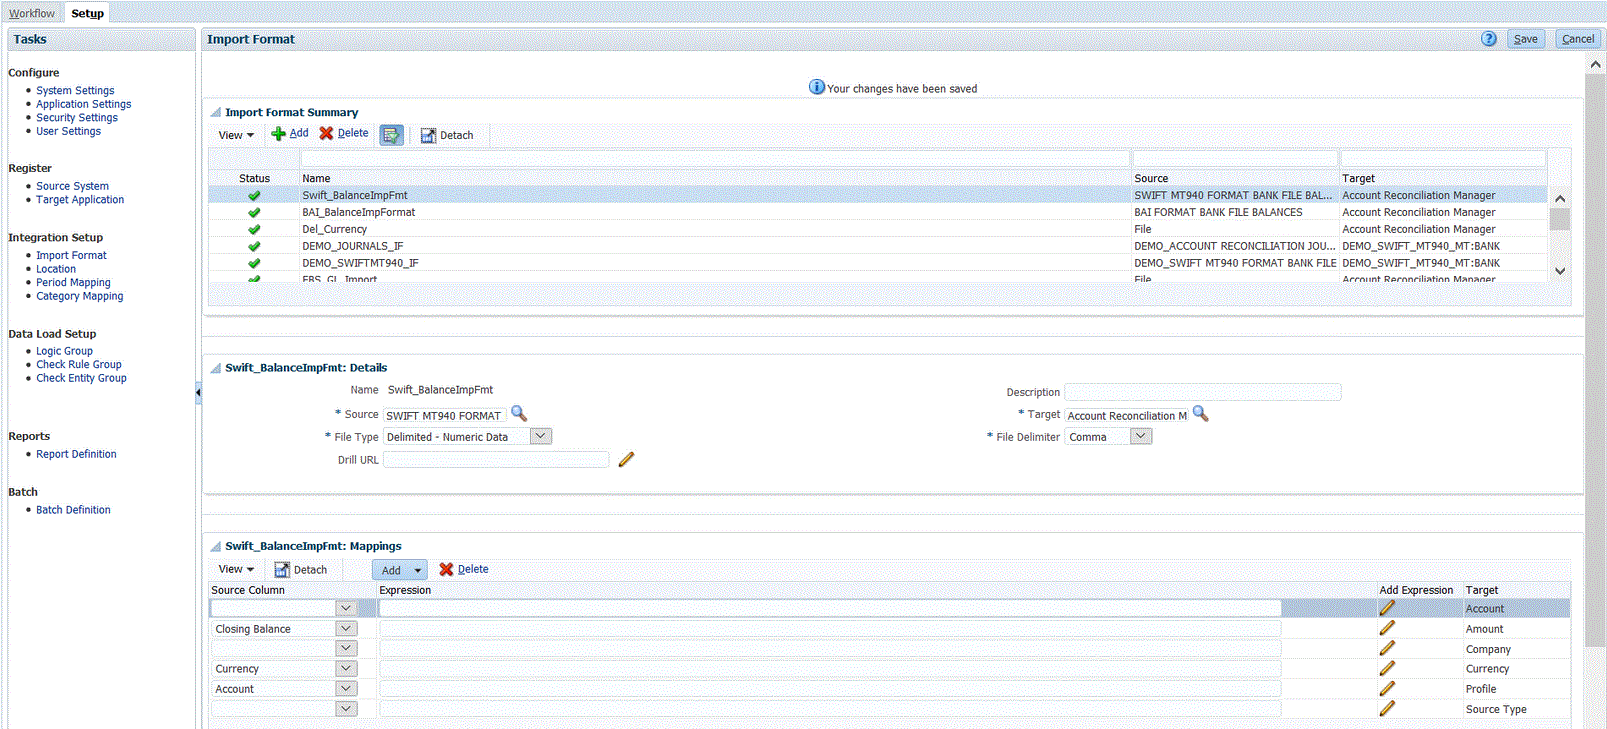 Image shows Import Format for SWIFT MT940 Format Bank Balances